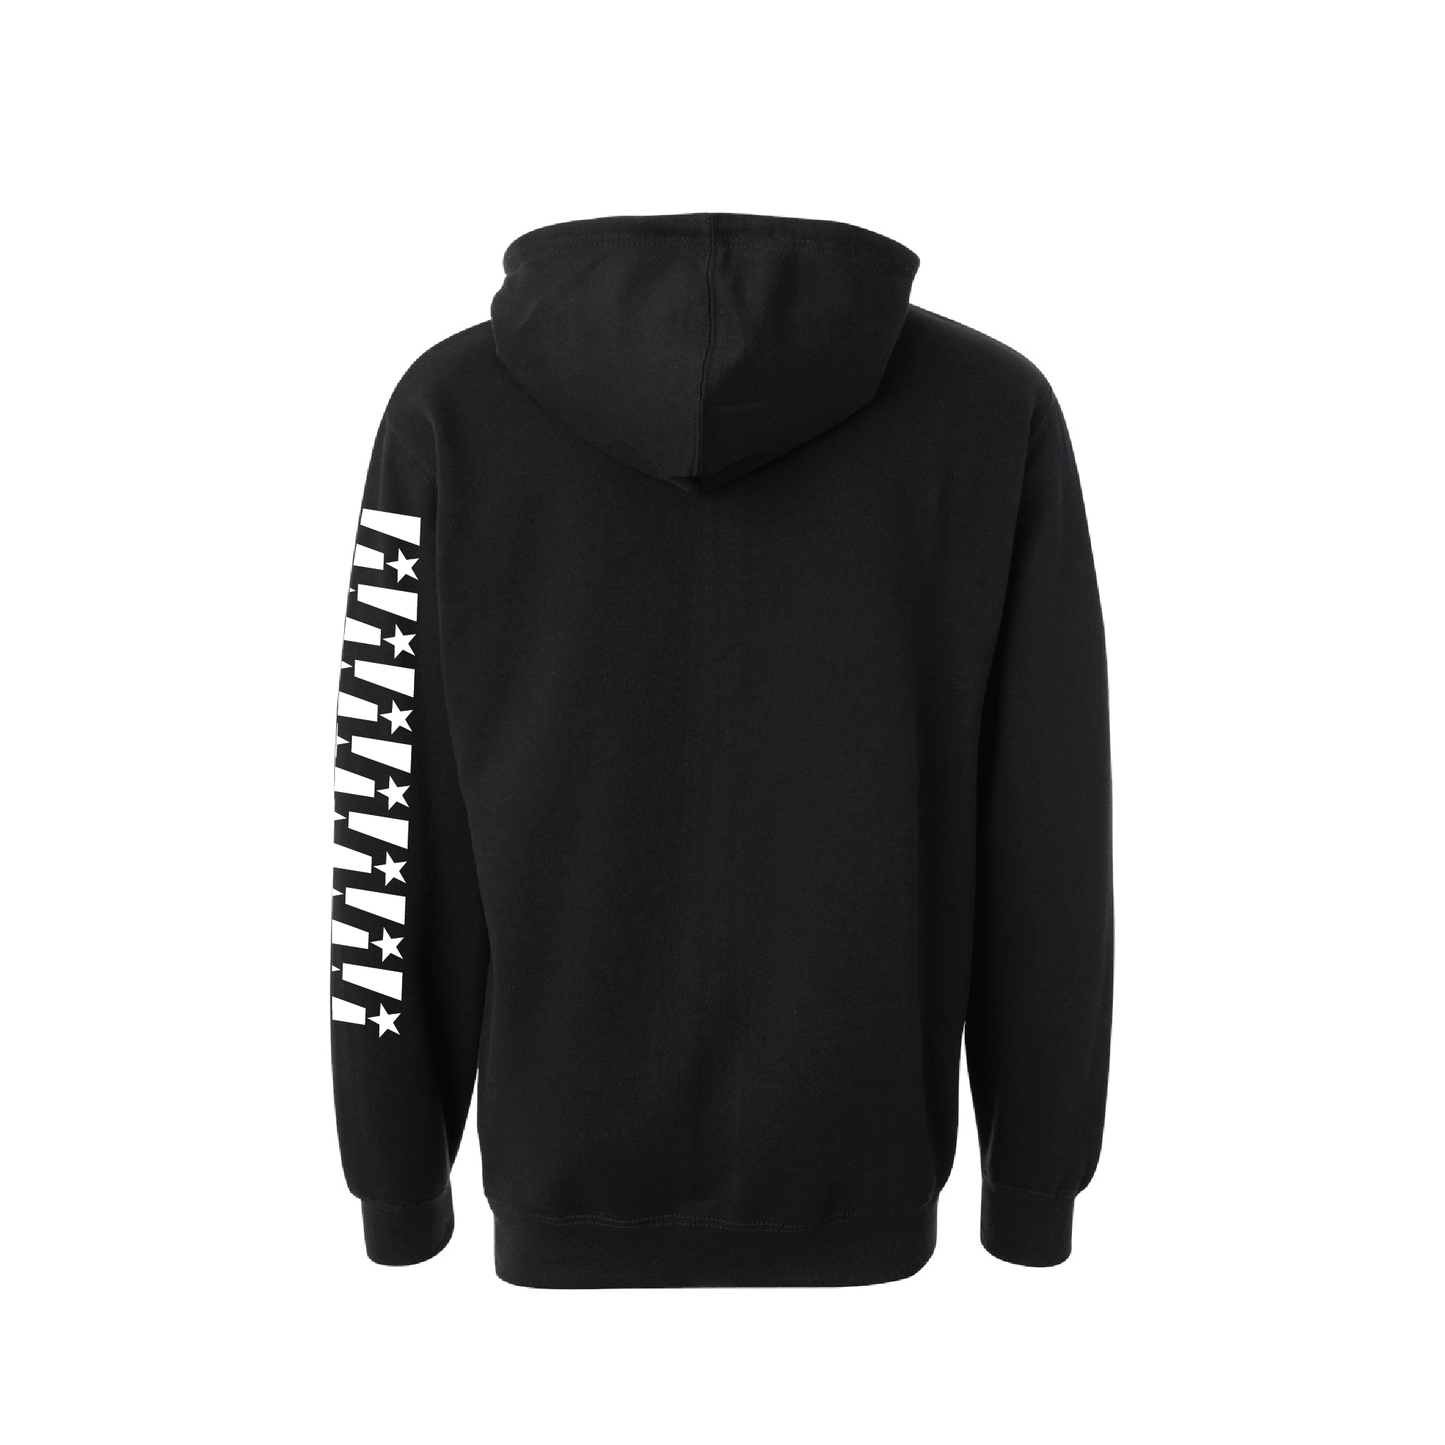 Black Hooded Sweatshirt *Limited Availability*